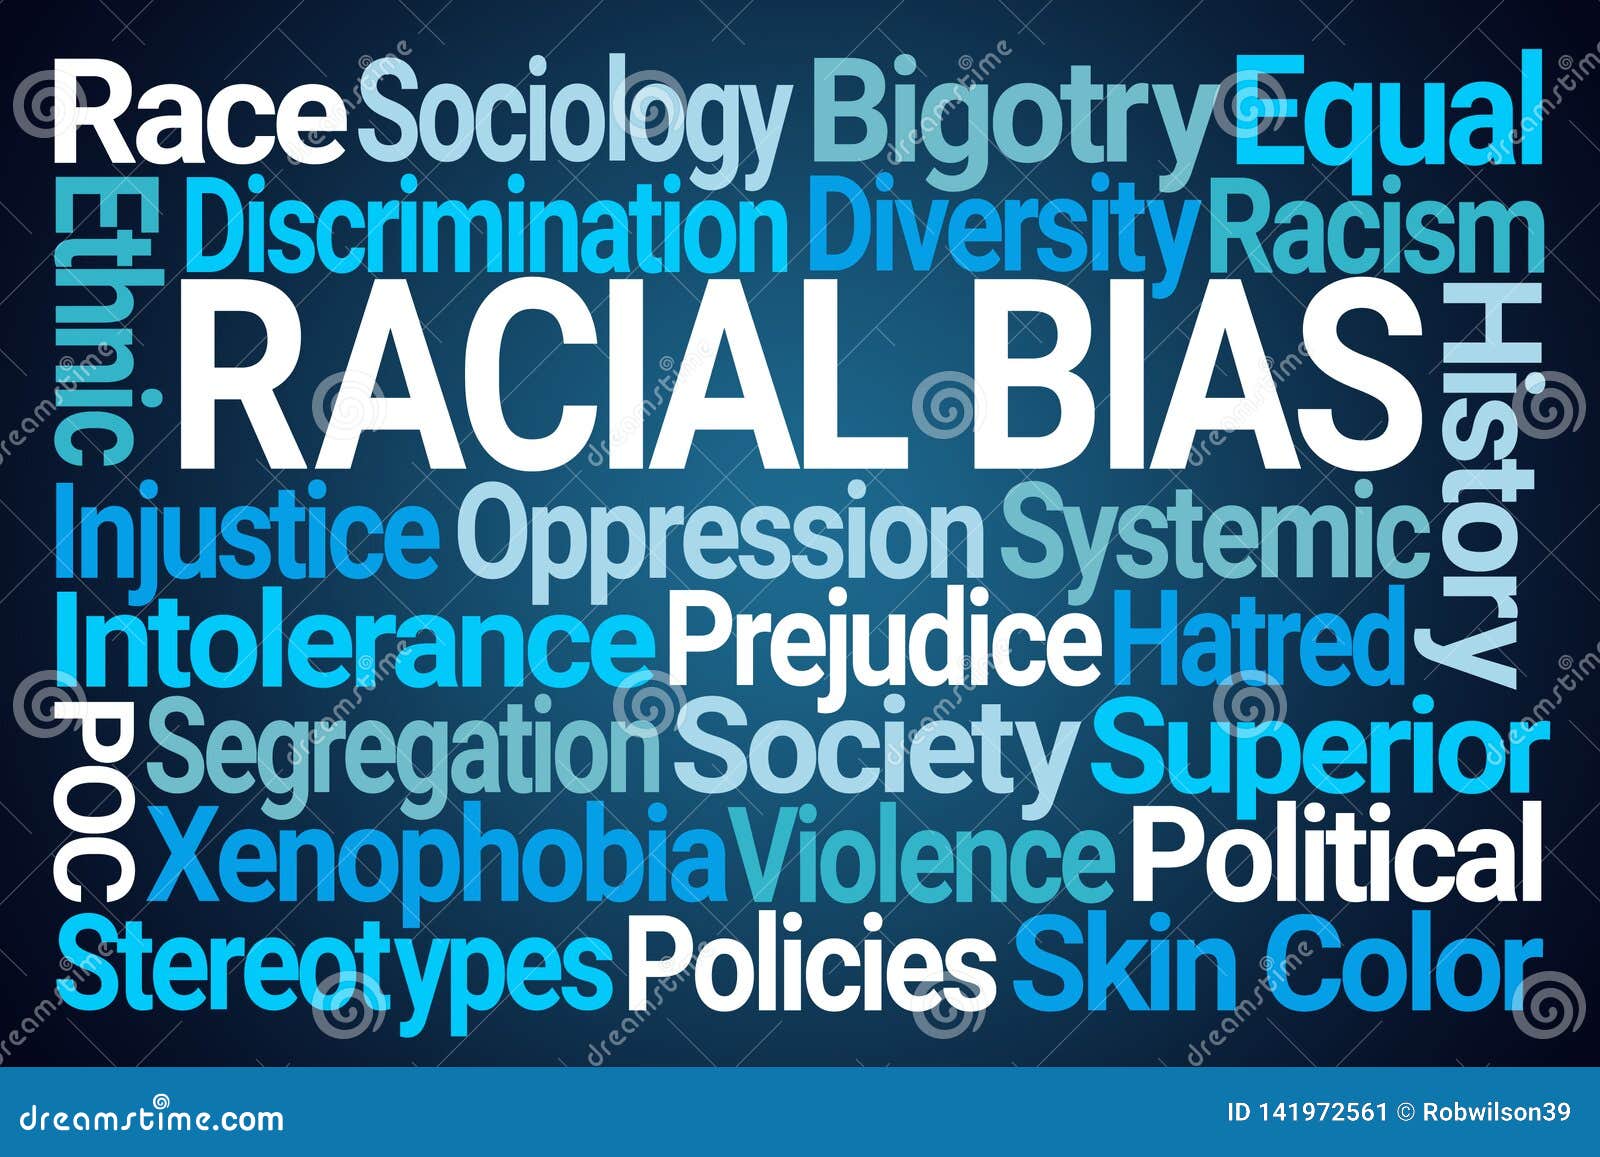 racial bias word cloud